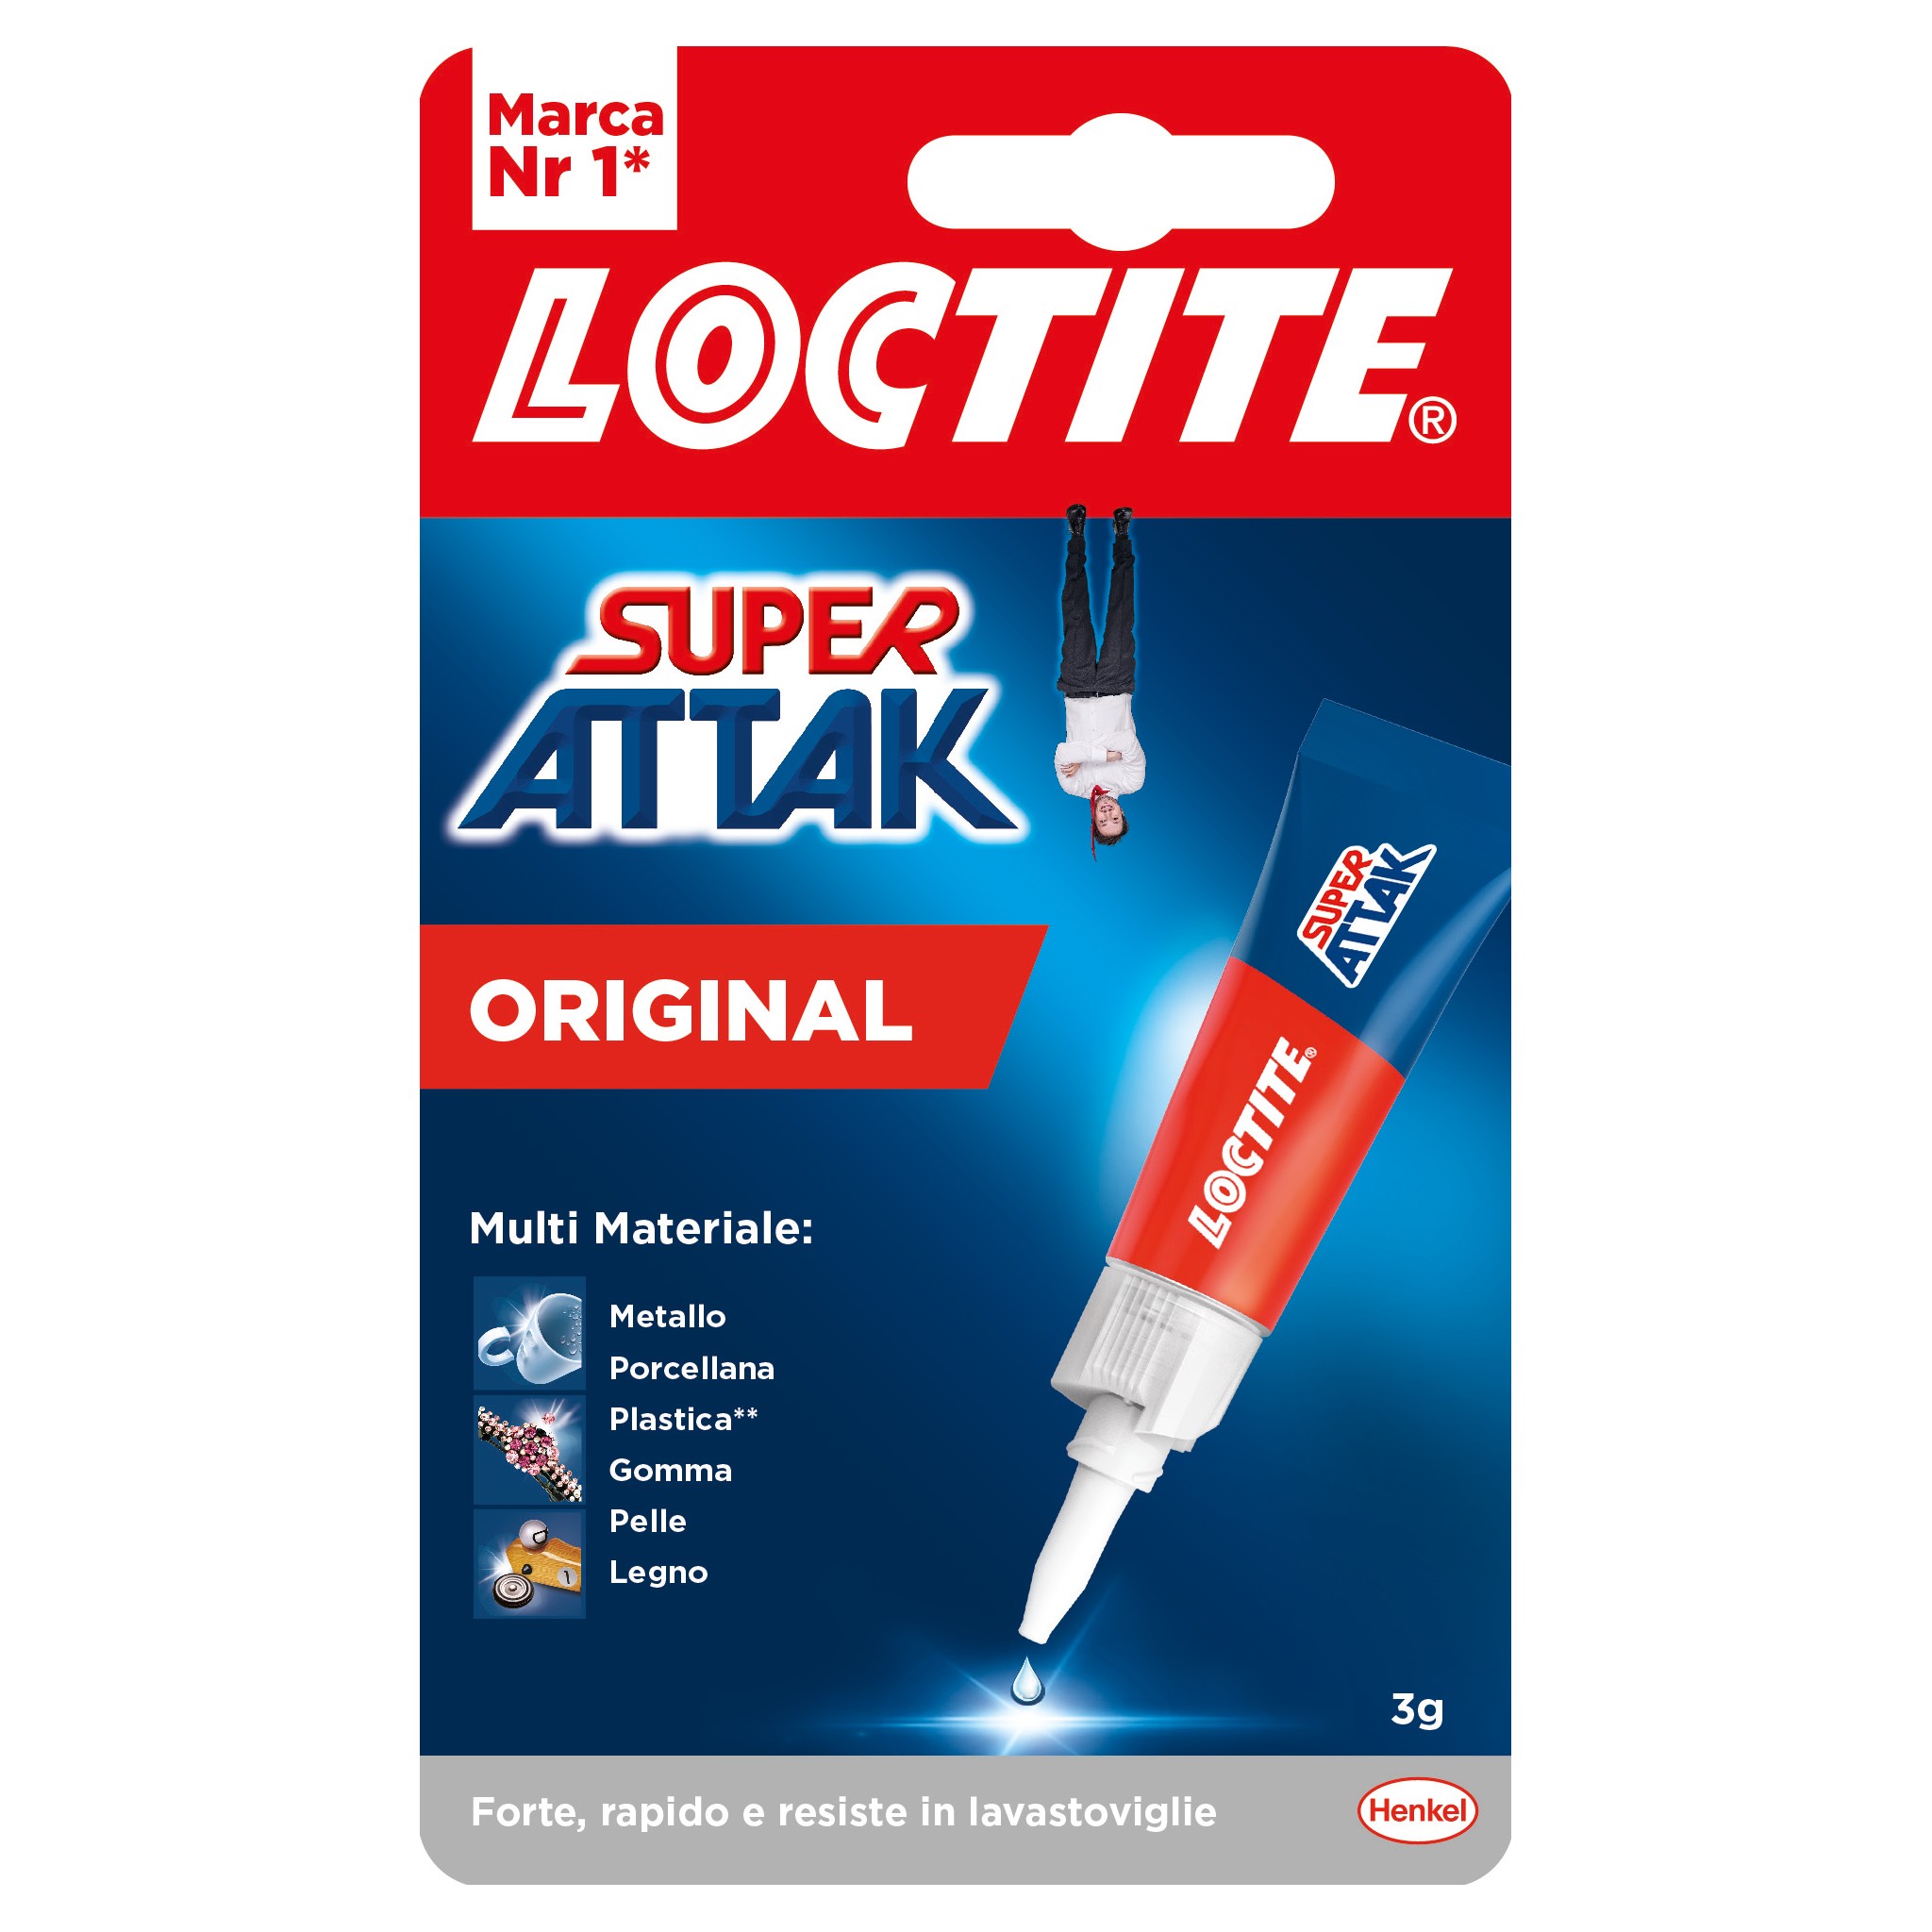 Loctite Super Attak Original (Reparto cancelleria)